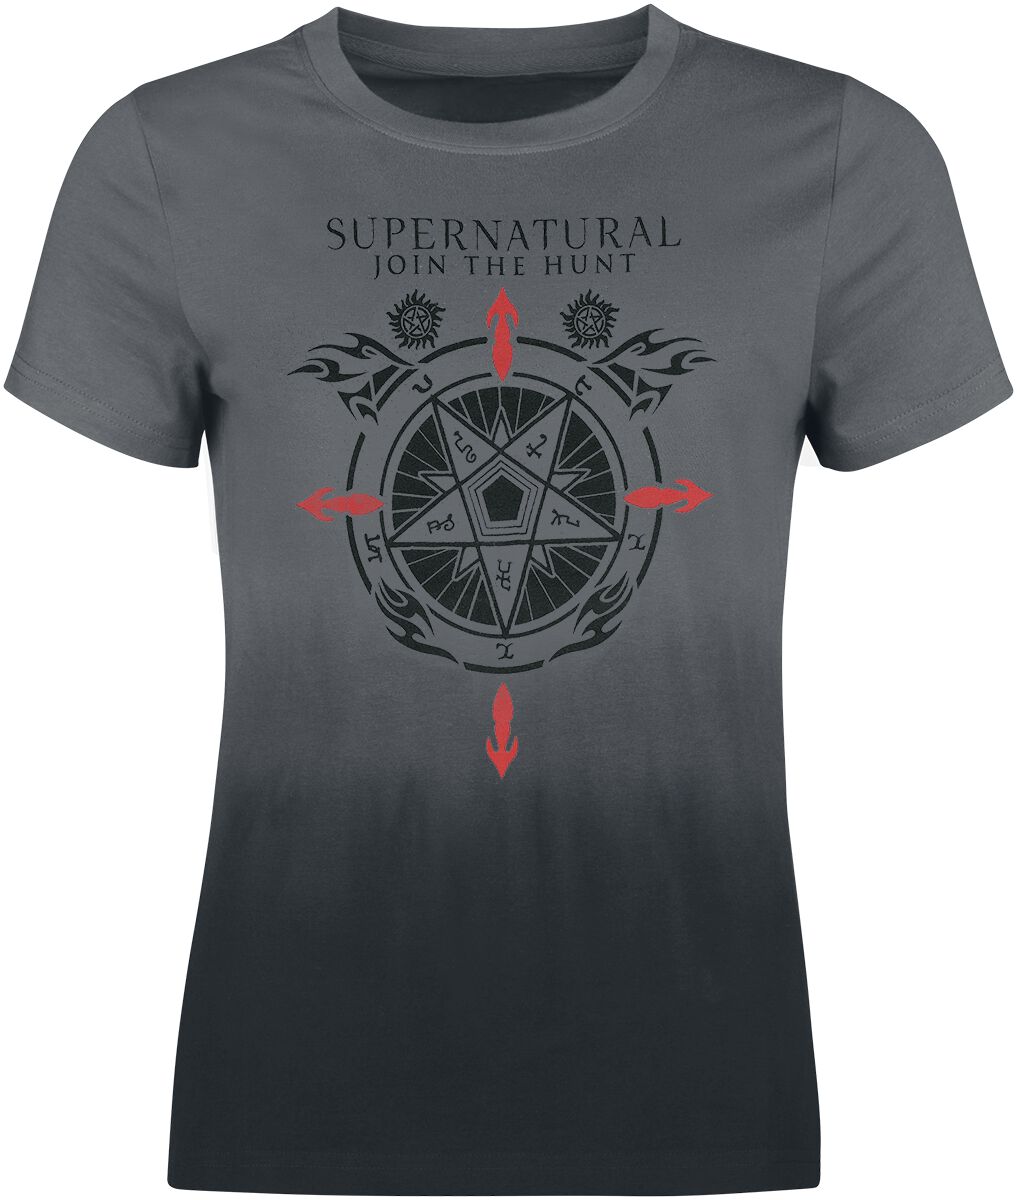 Supernatural Symbols T-Shirt multicolor in XXL